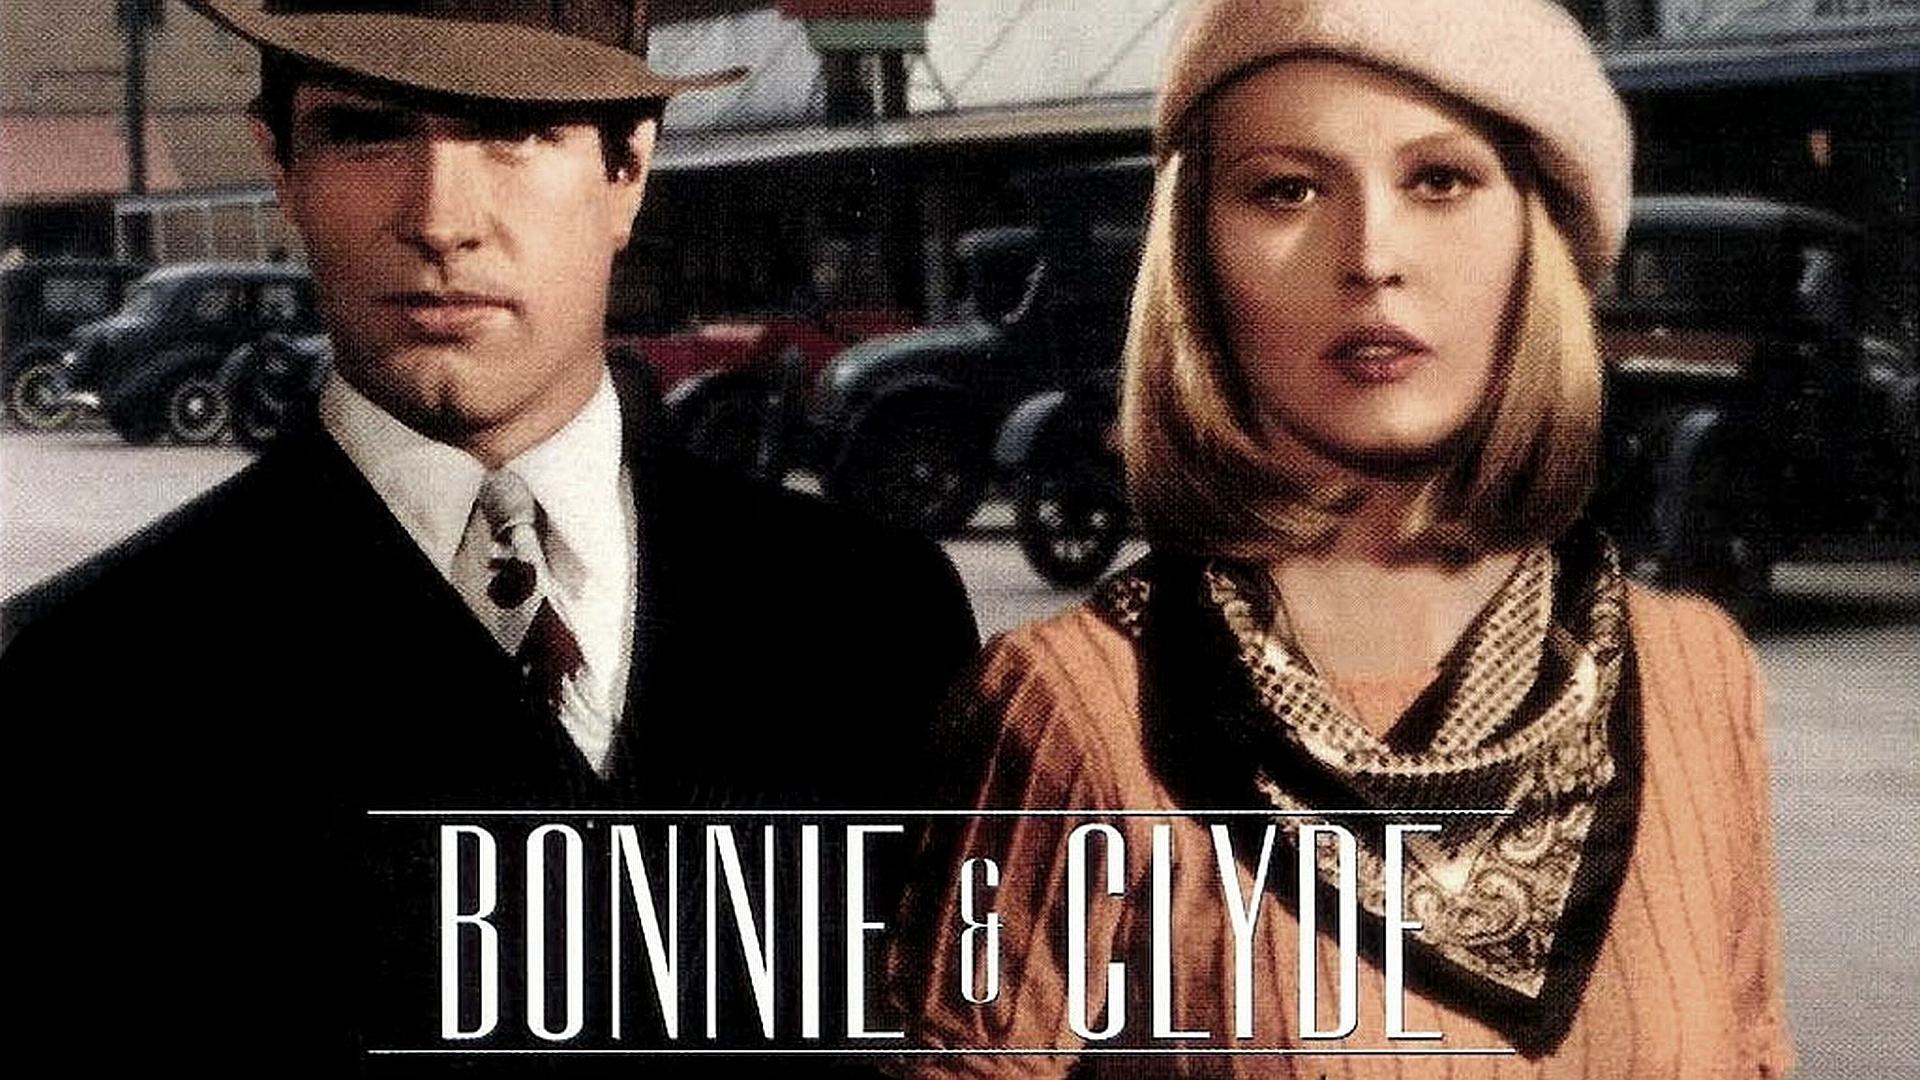 Bonnie Clyde Wallpaper HD Background C